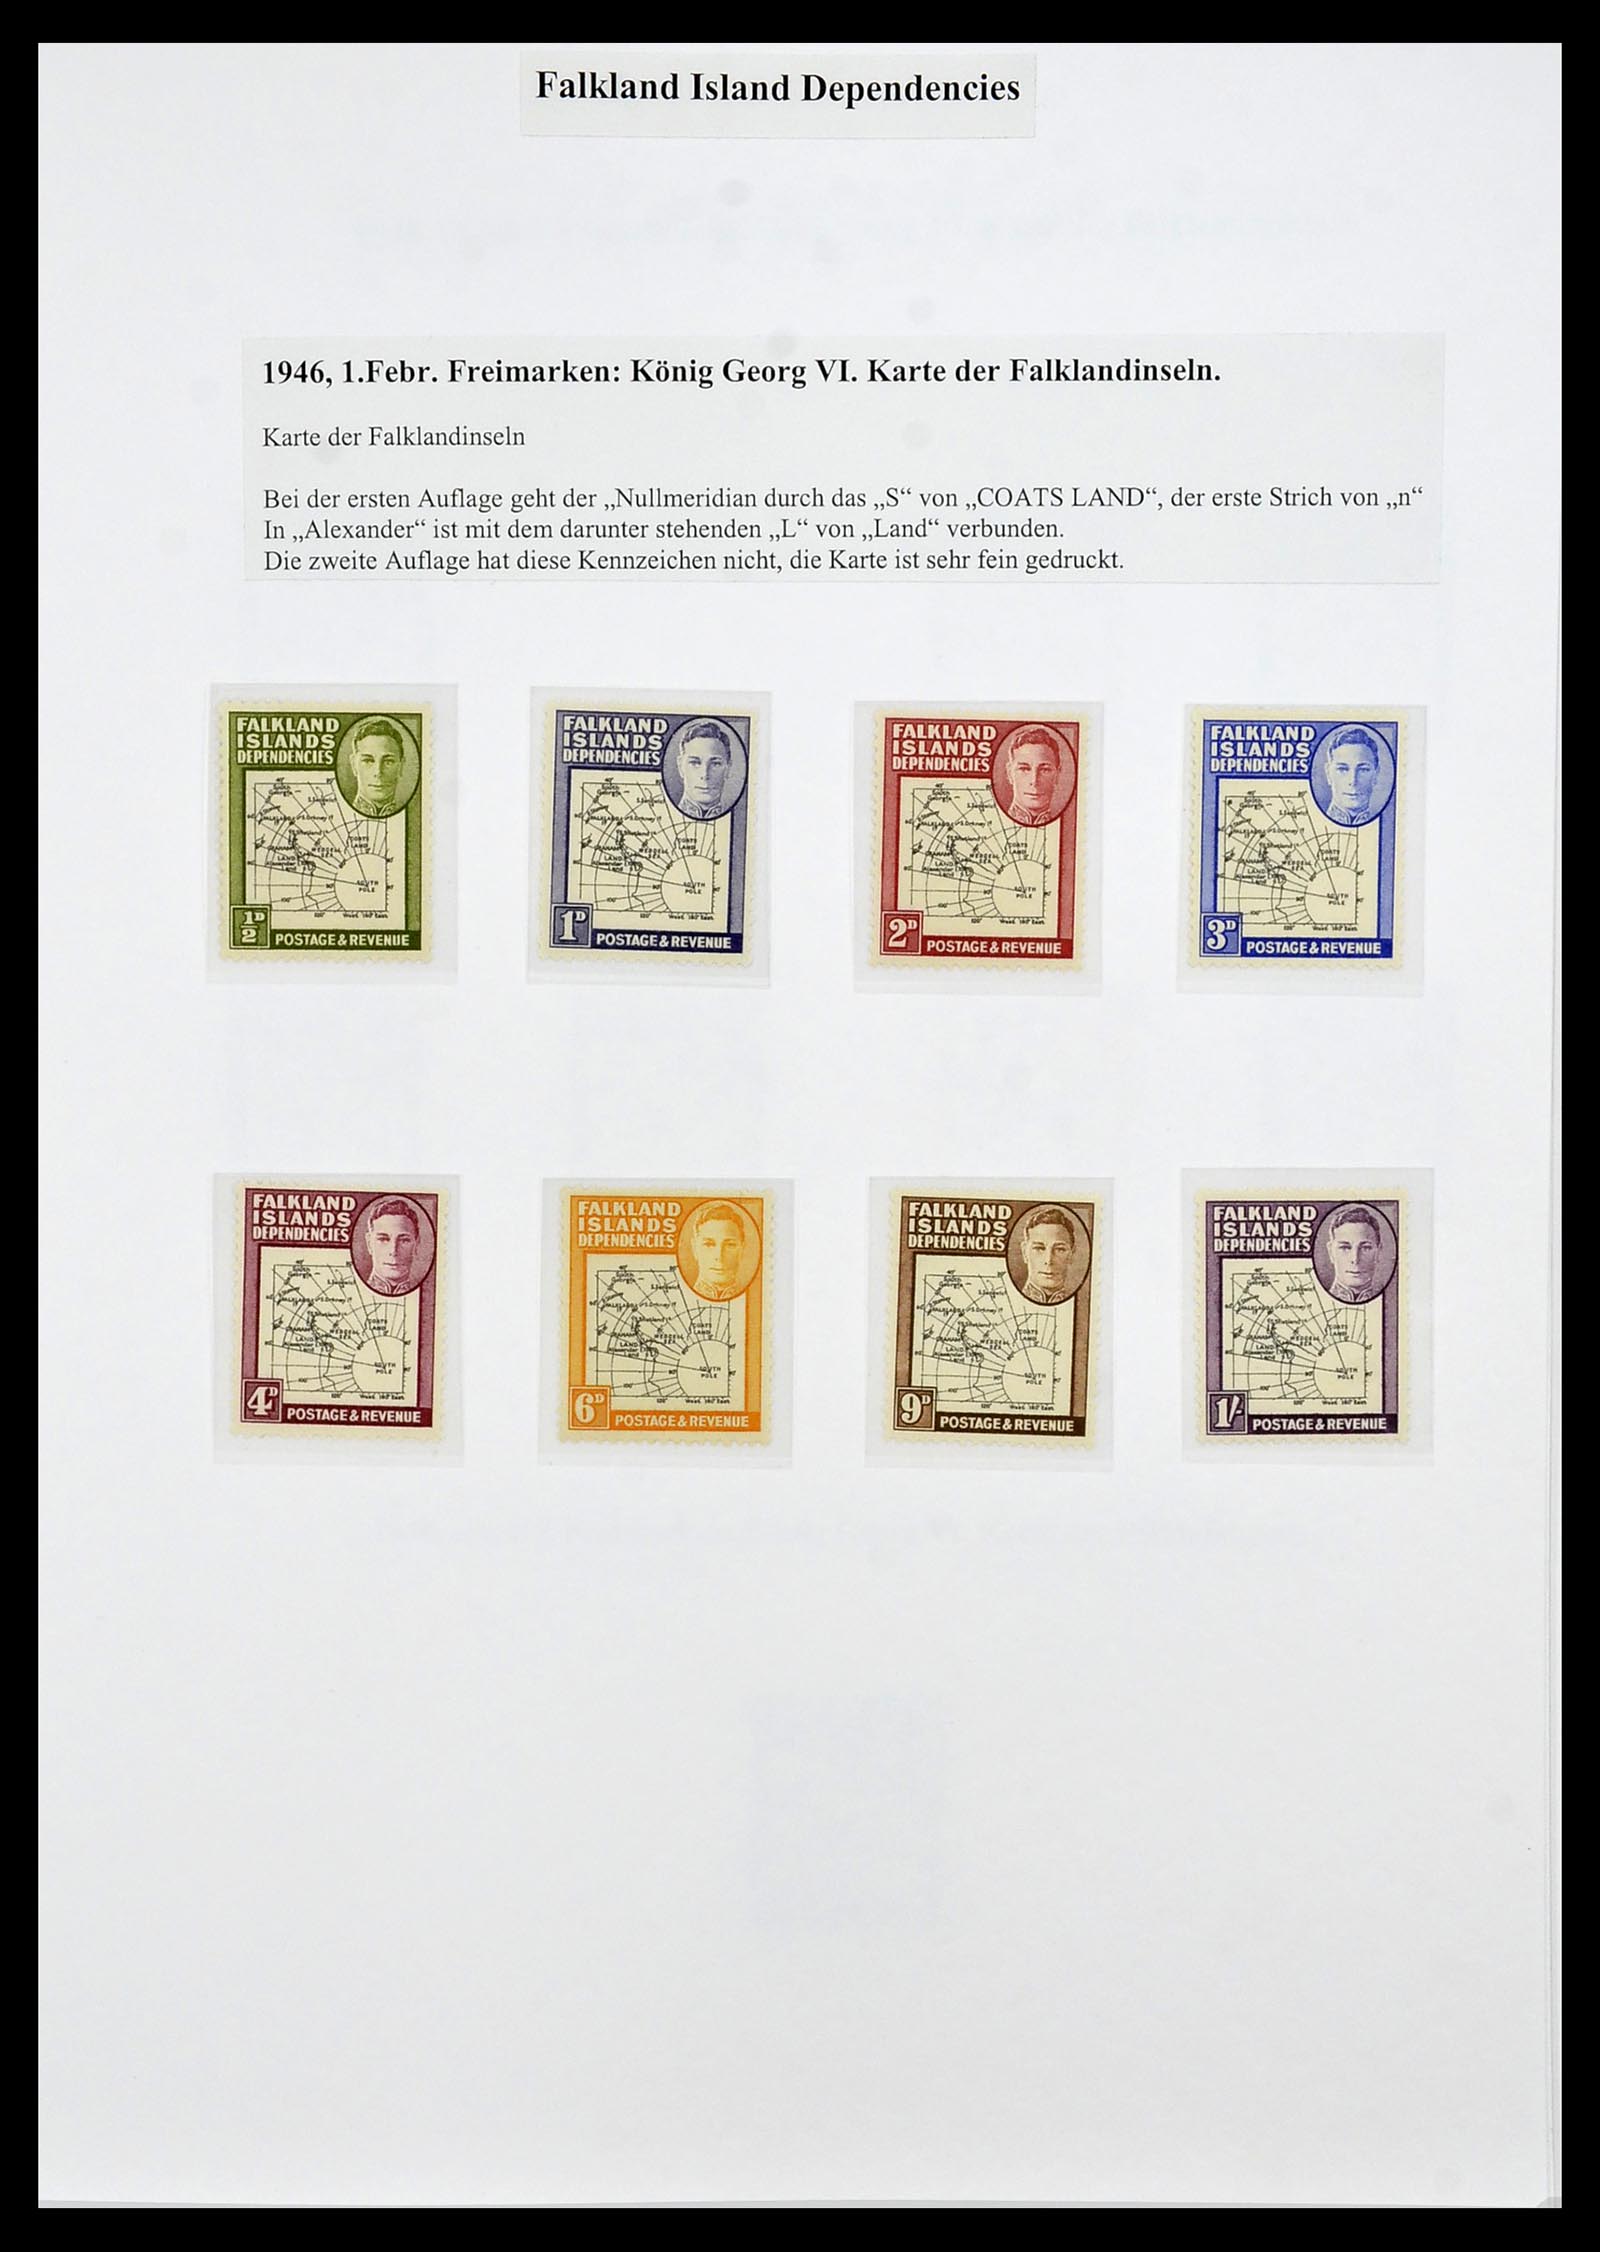 34222 006 - Stamp collection 34222 Falkland Dependencies 1891-1987.